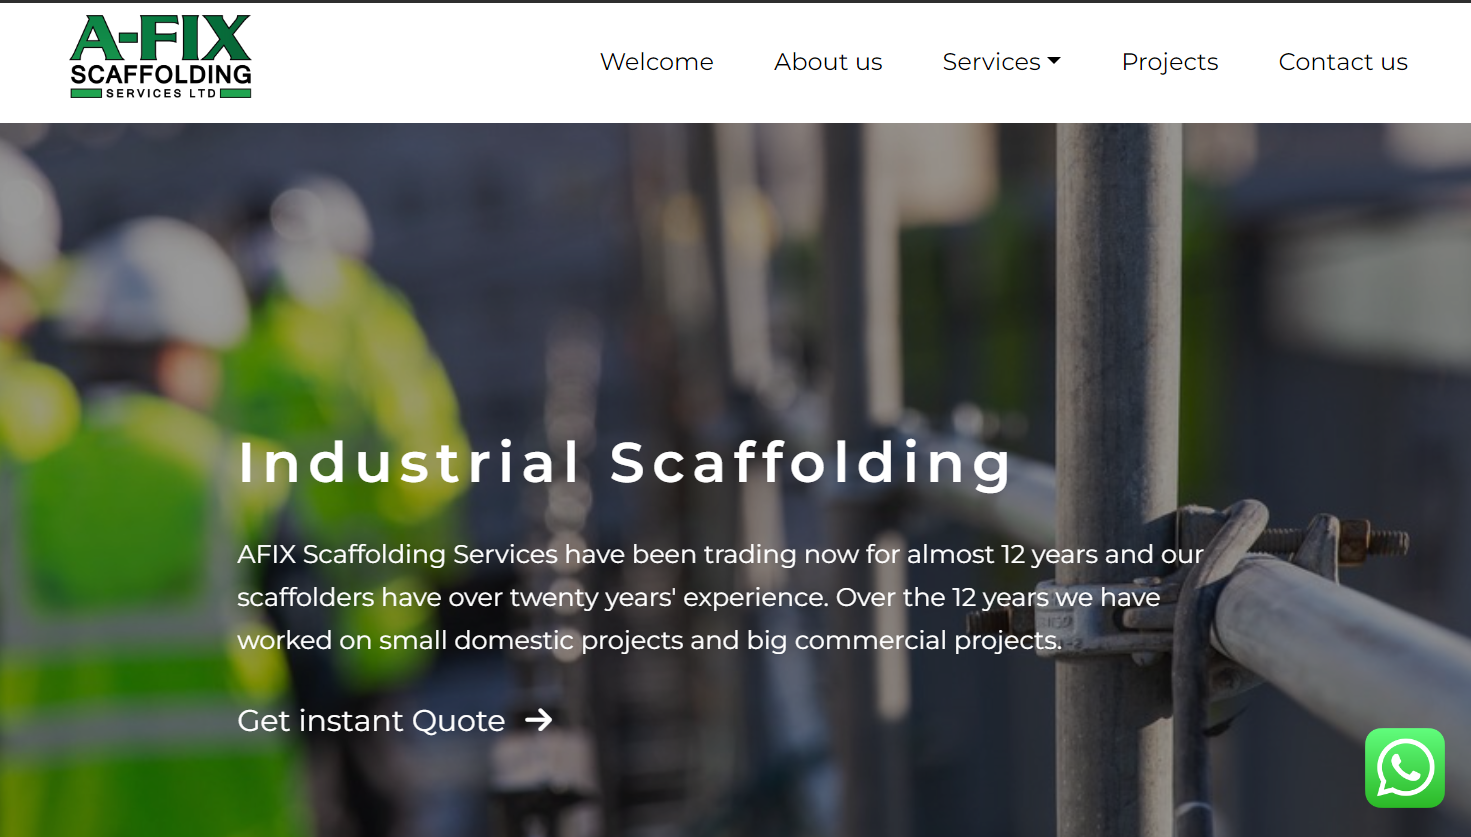 A-FIX Scaffolding Services